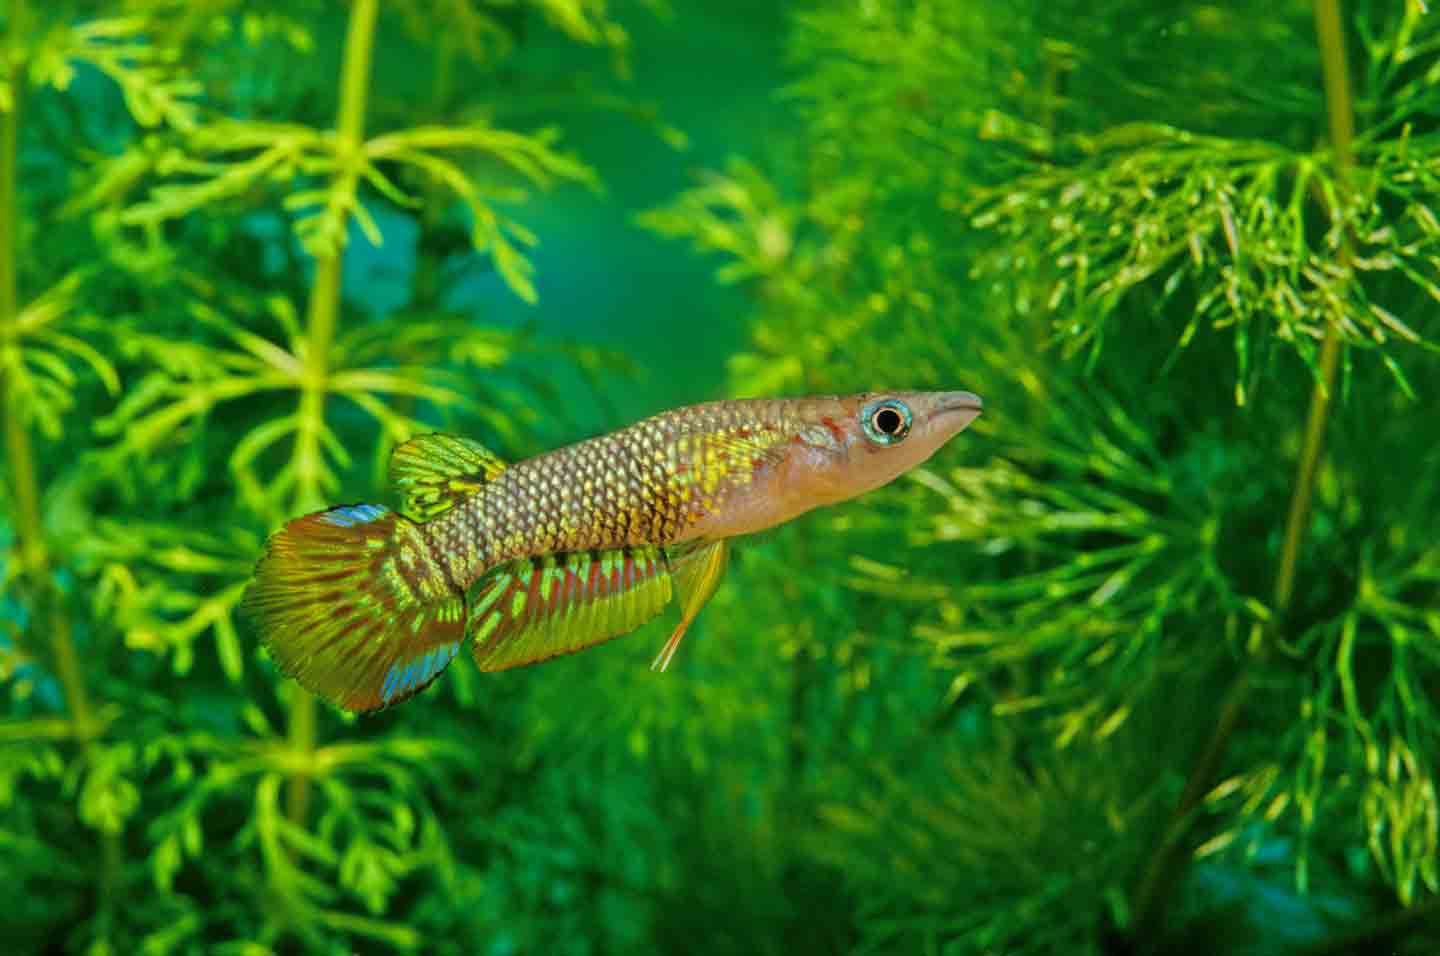 Photo of a golden wonder killifish